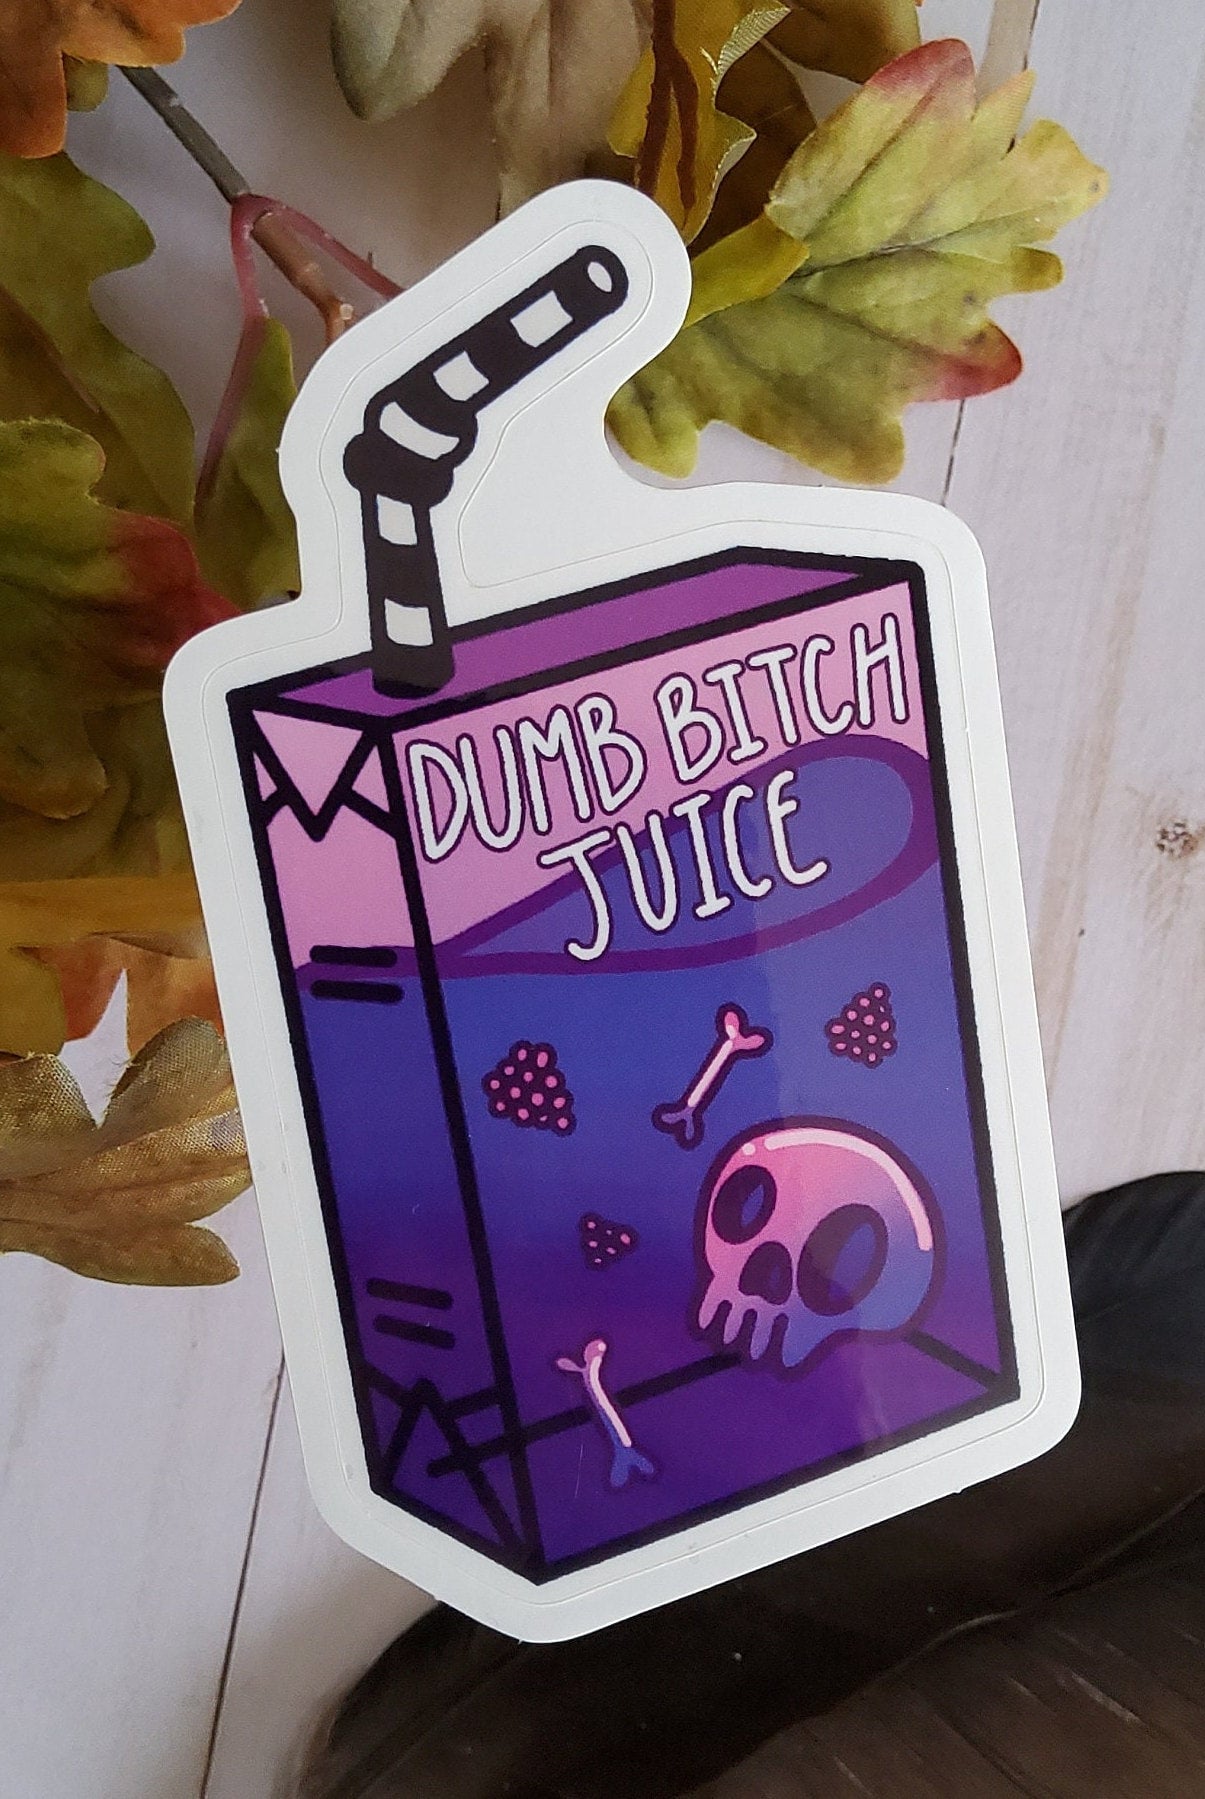 GLOSSY STICKER: Dumb Bitch Juice Carton Die Cut Sticker , Purple Juice Carton , Juice Sticker , Juice Carton Sticker , Kawaii Juice Sticker